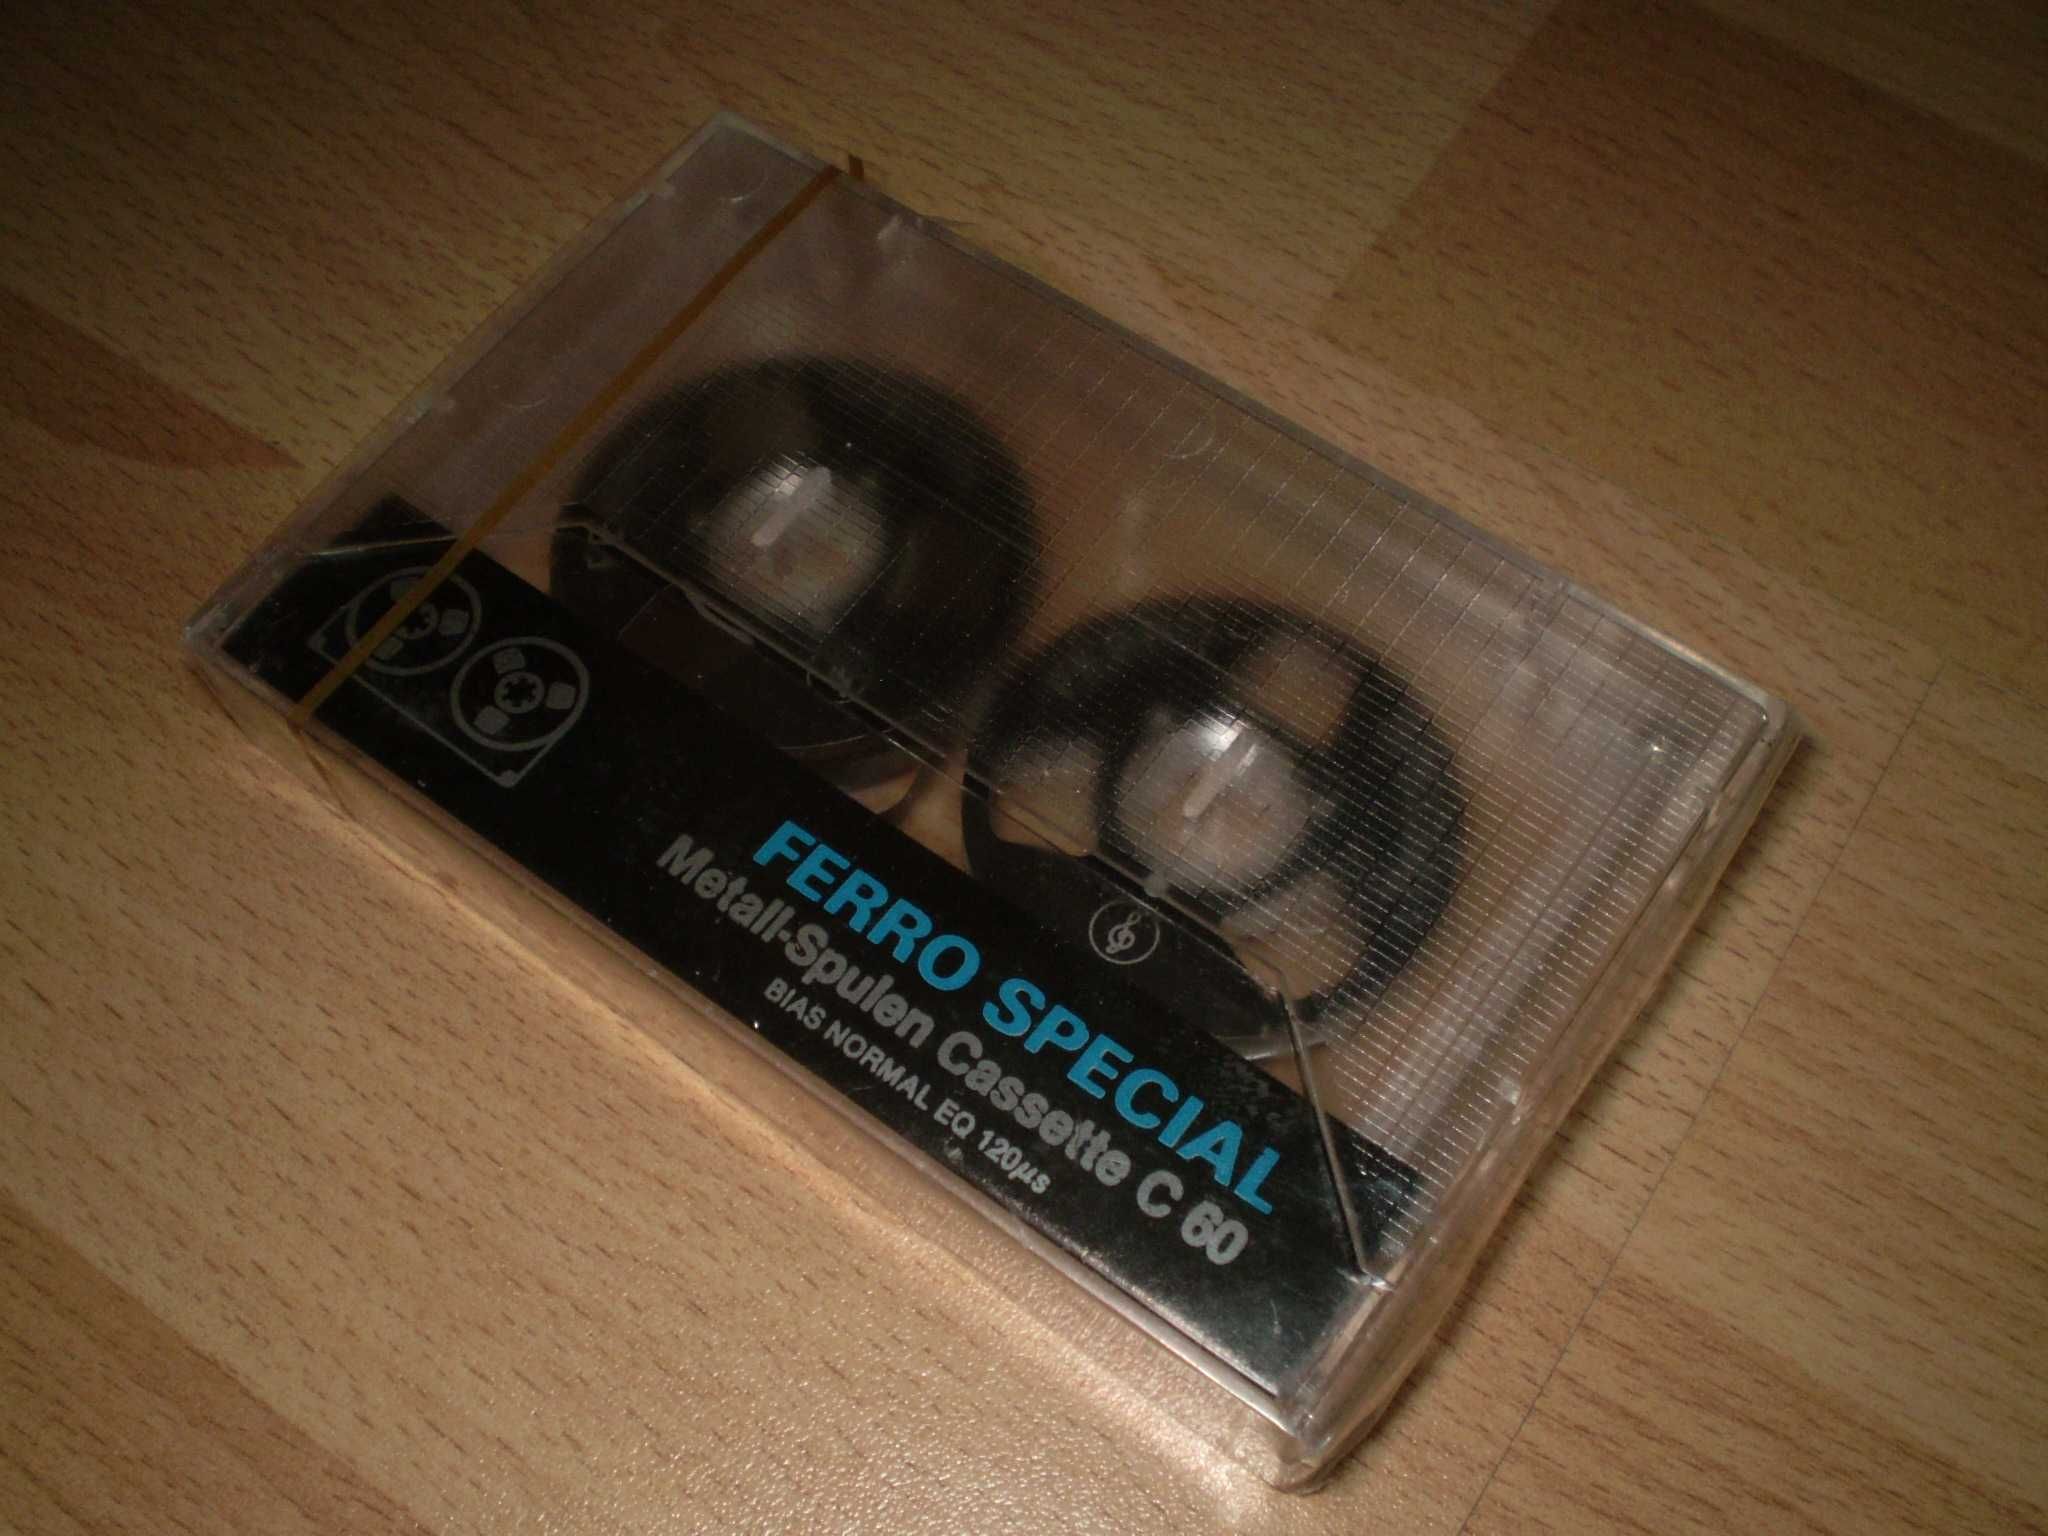 Аудиокассеты для коллекции FERRO SPECIAL Metall-Spulen Cassette C60